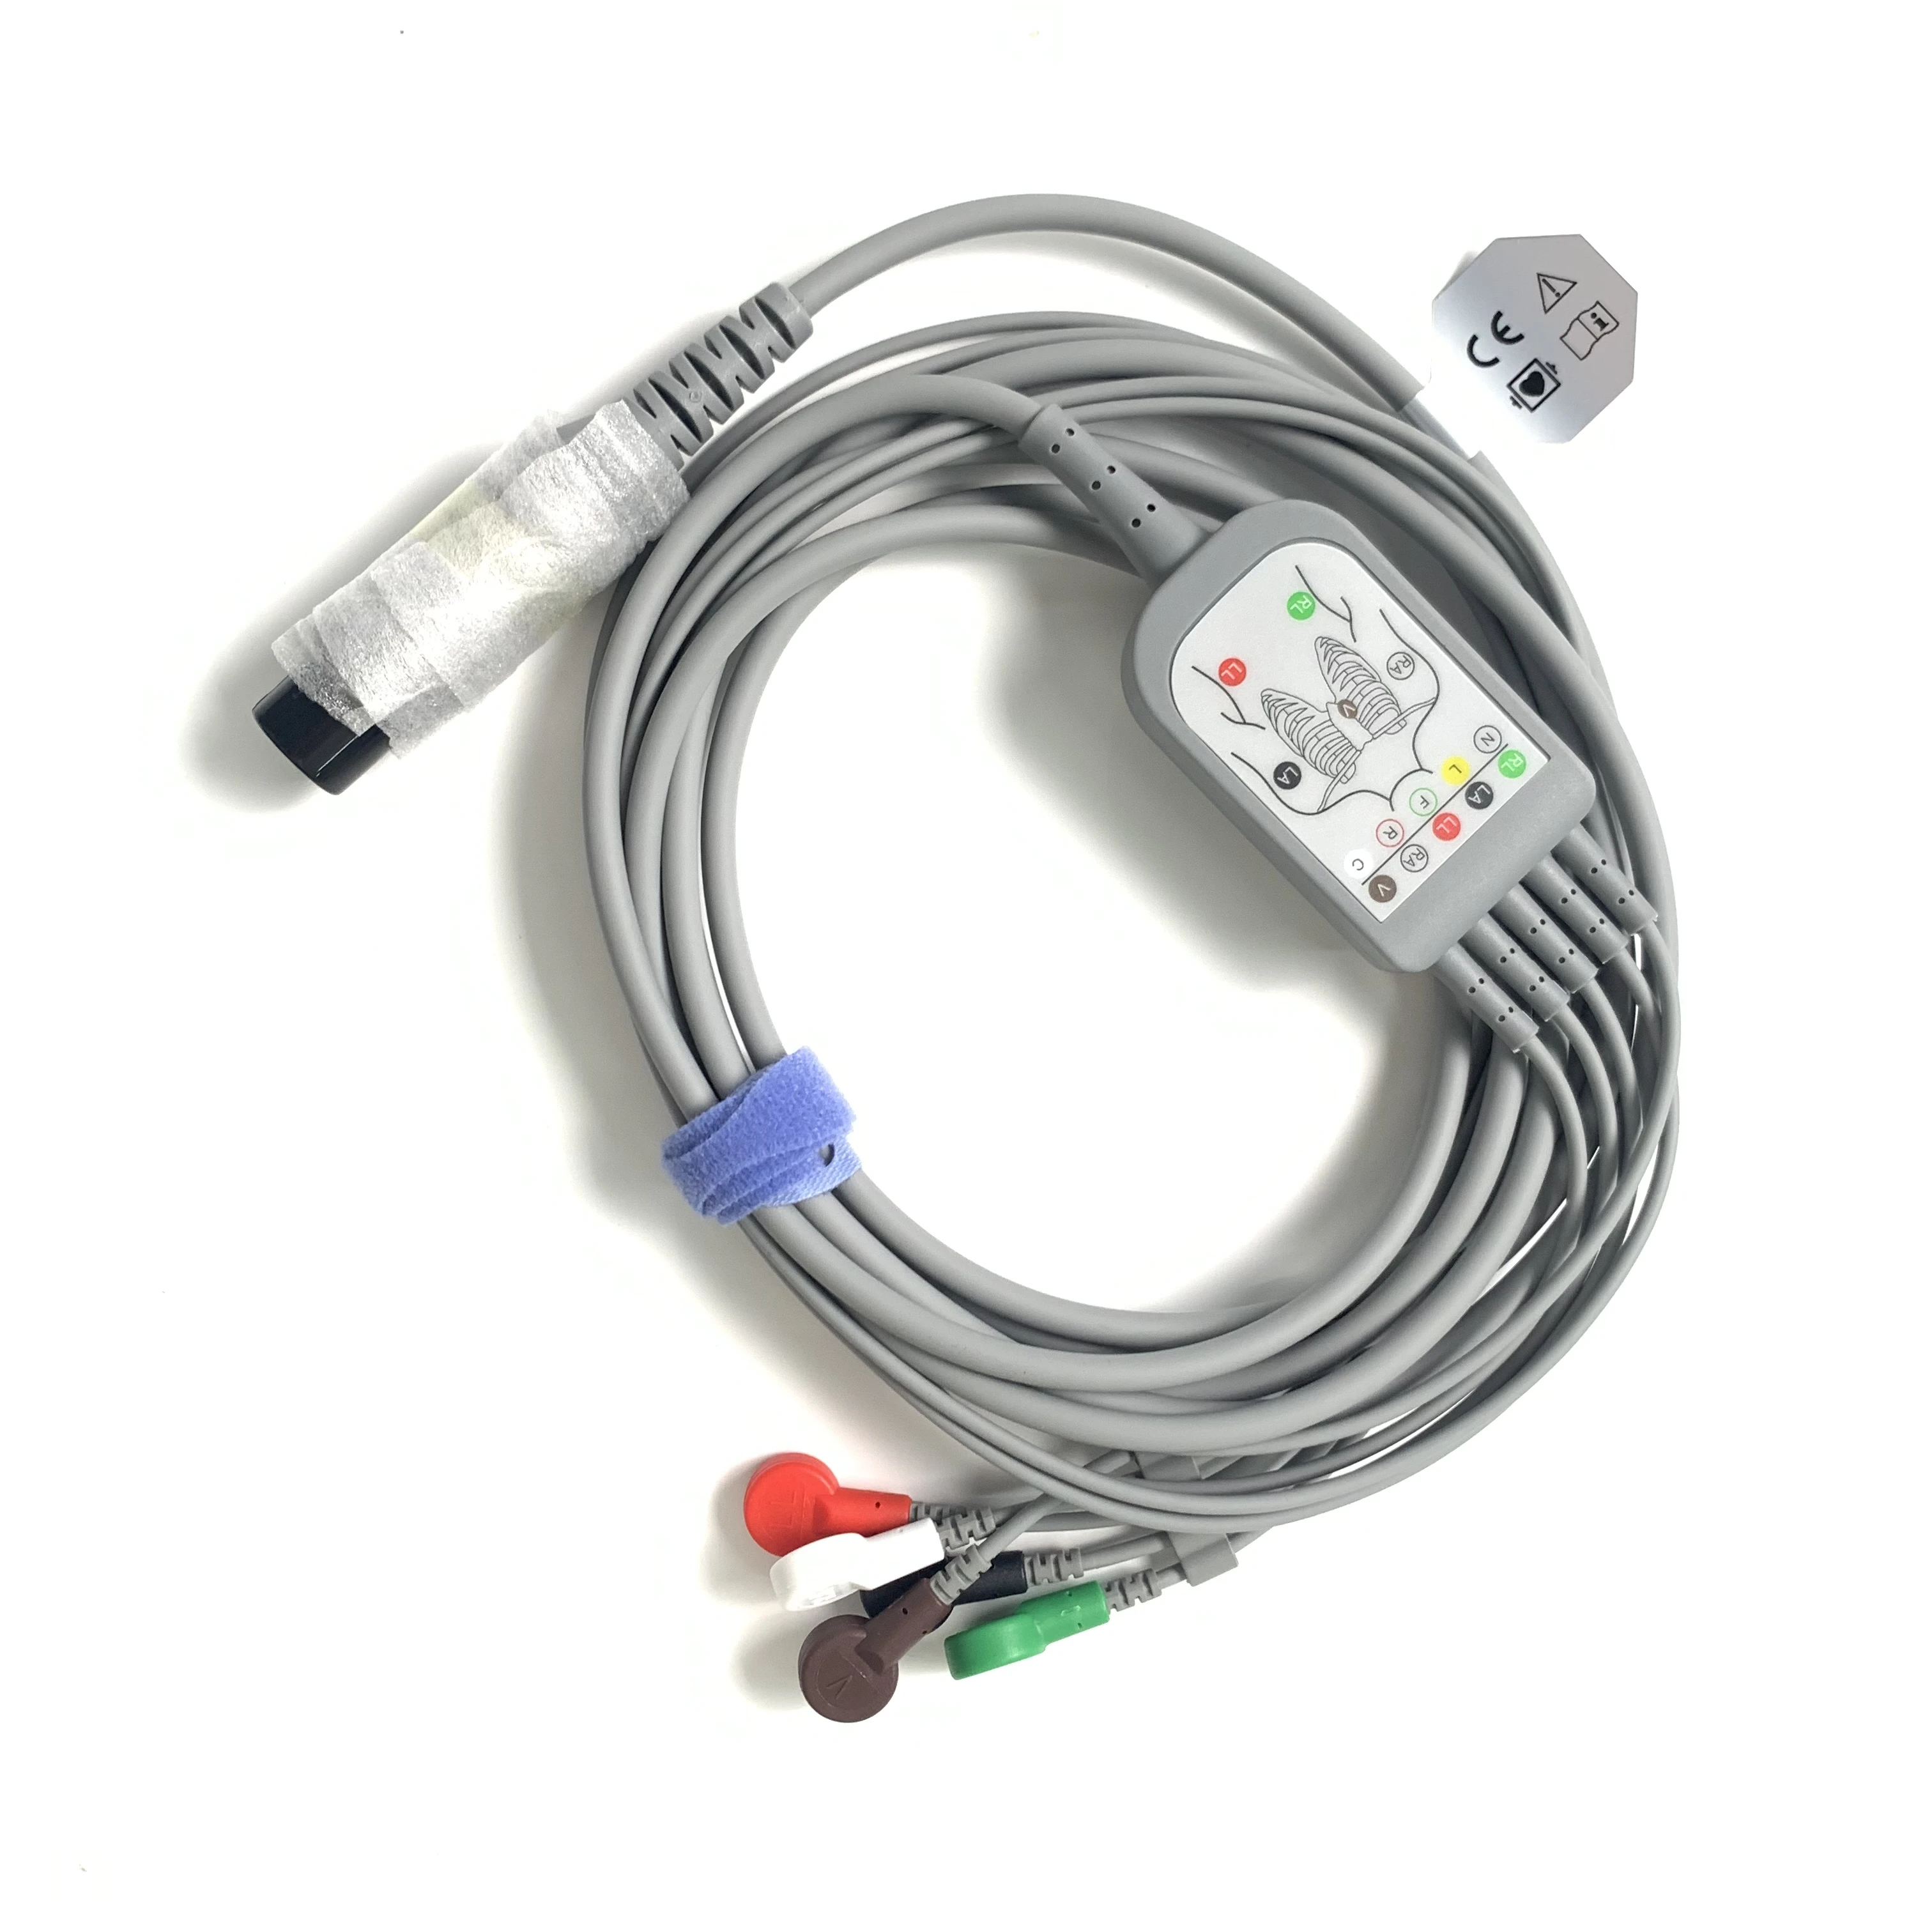 Edan EC05DASO61 ECG Cable 5-Lead 6-Pin, Defib, Snap, Aha, 3.4m Reusable (New Original)